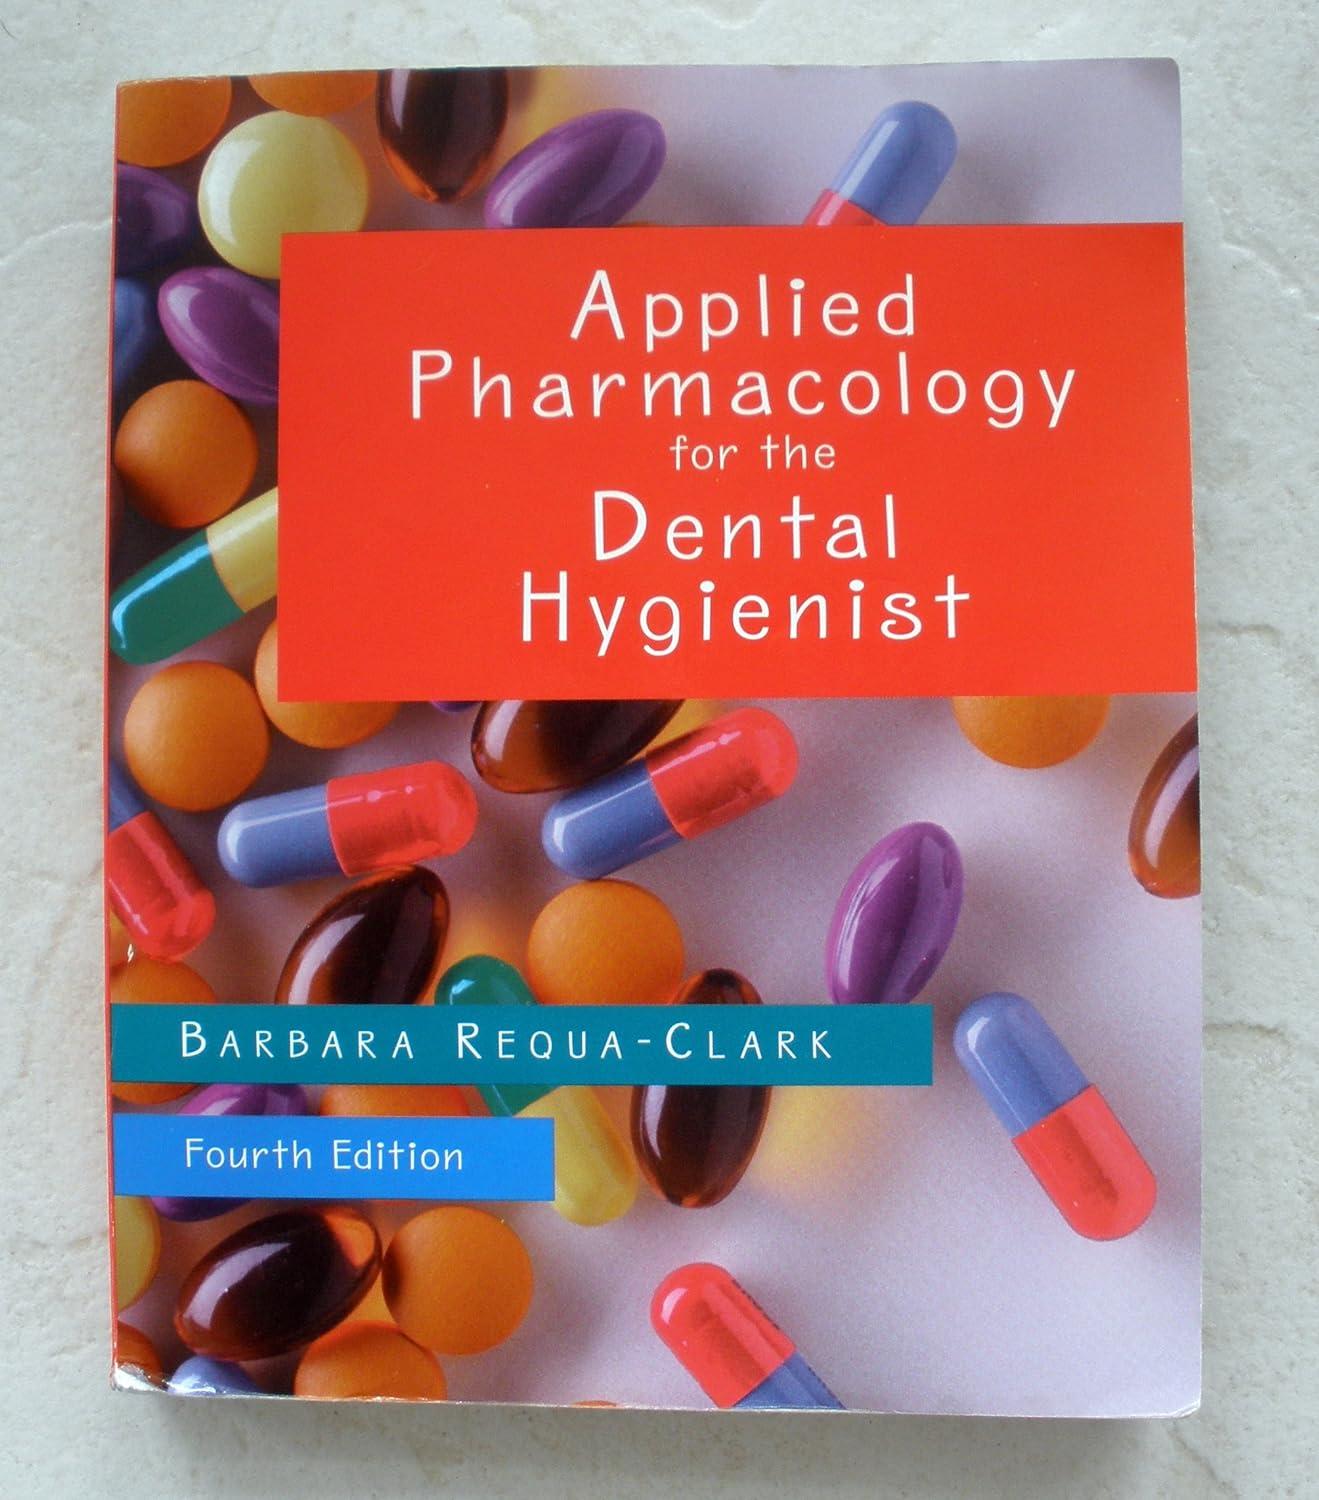 applied pharmacology for the dental hygienist 4th edition barbara requa-clark, elena bablenis haveles